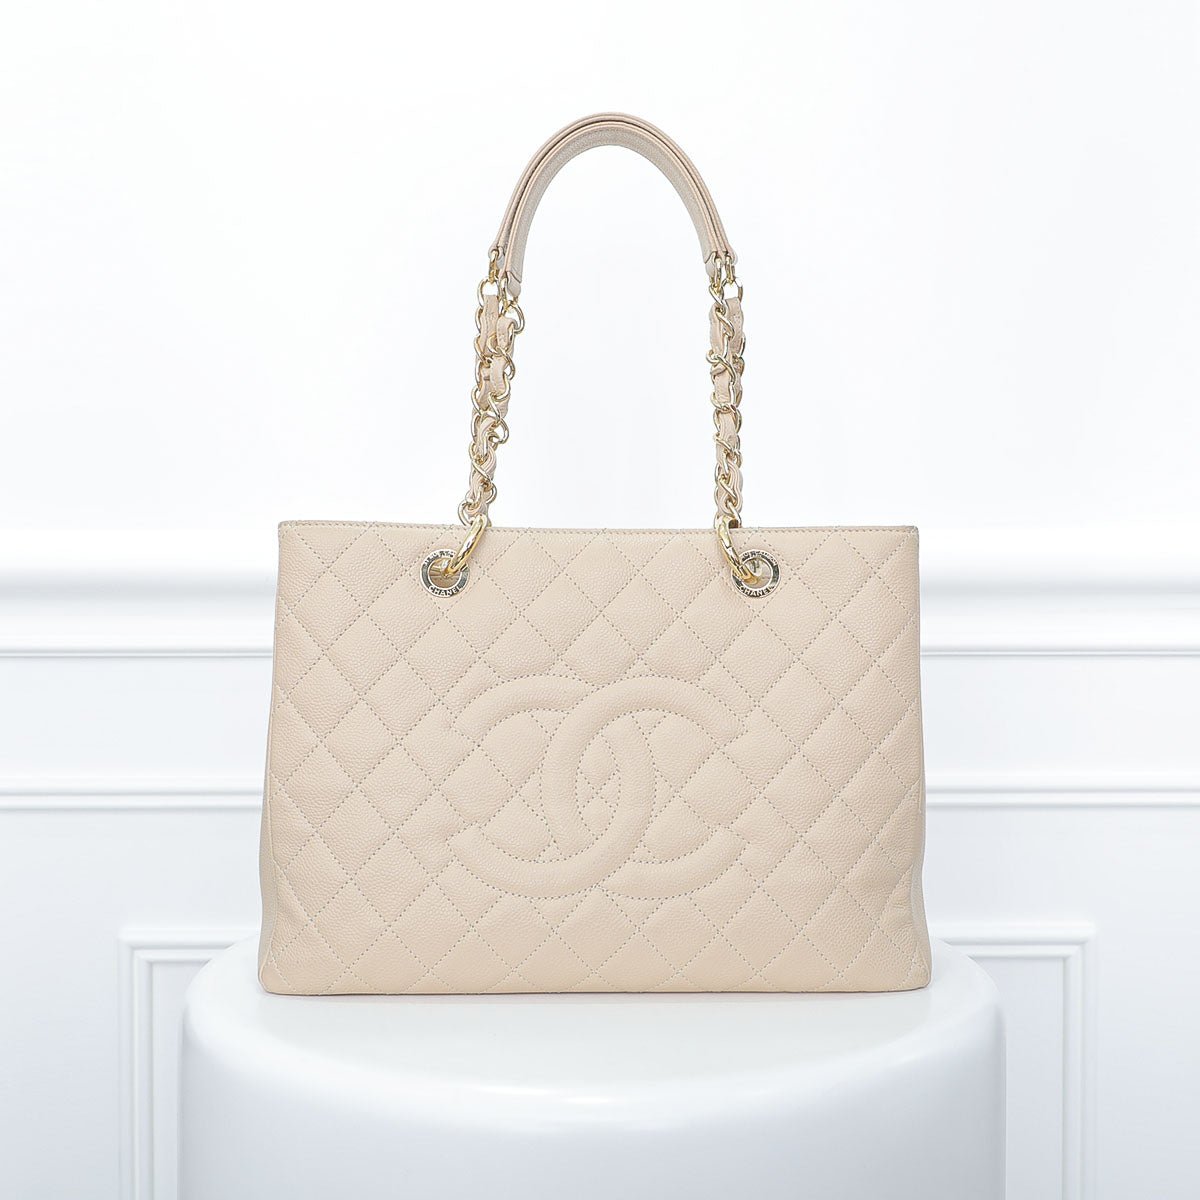 The Closet - Chanel Beige GST Medium Bag | The Closet